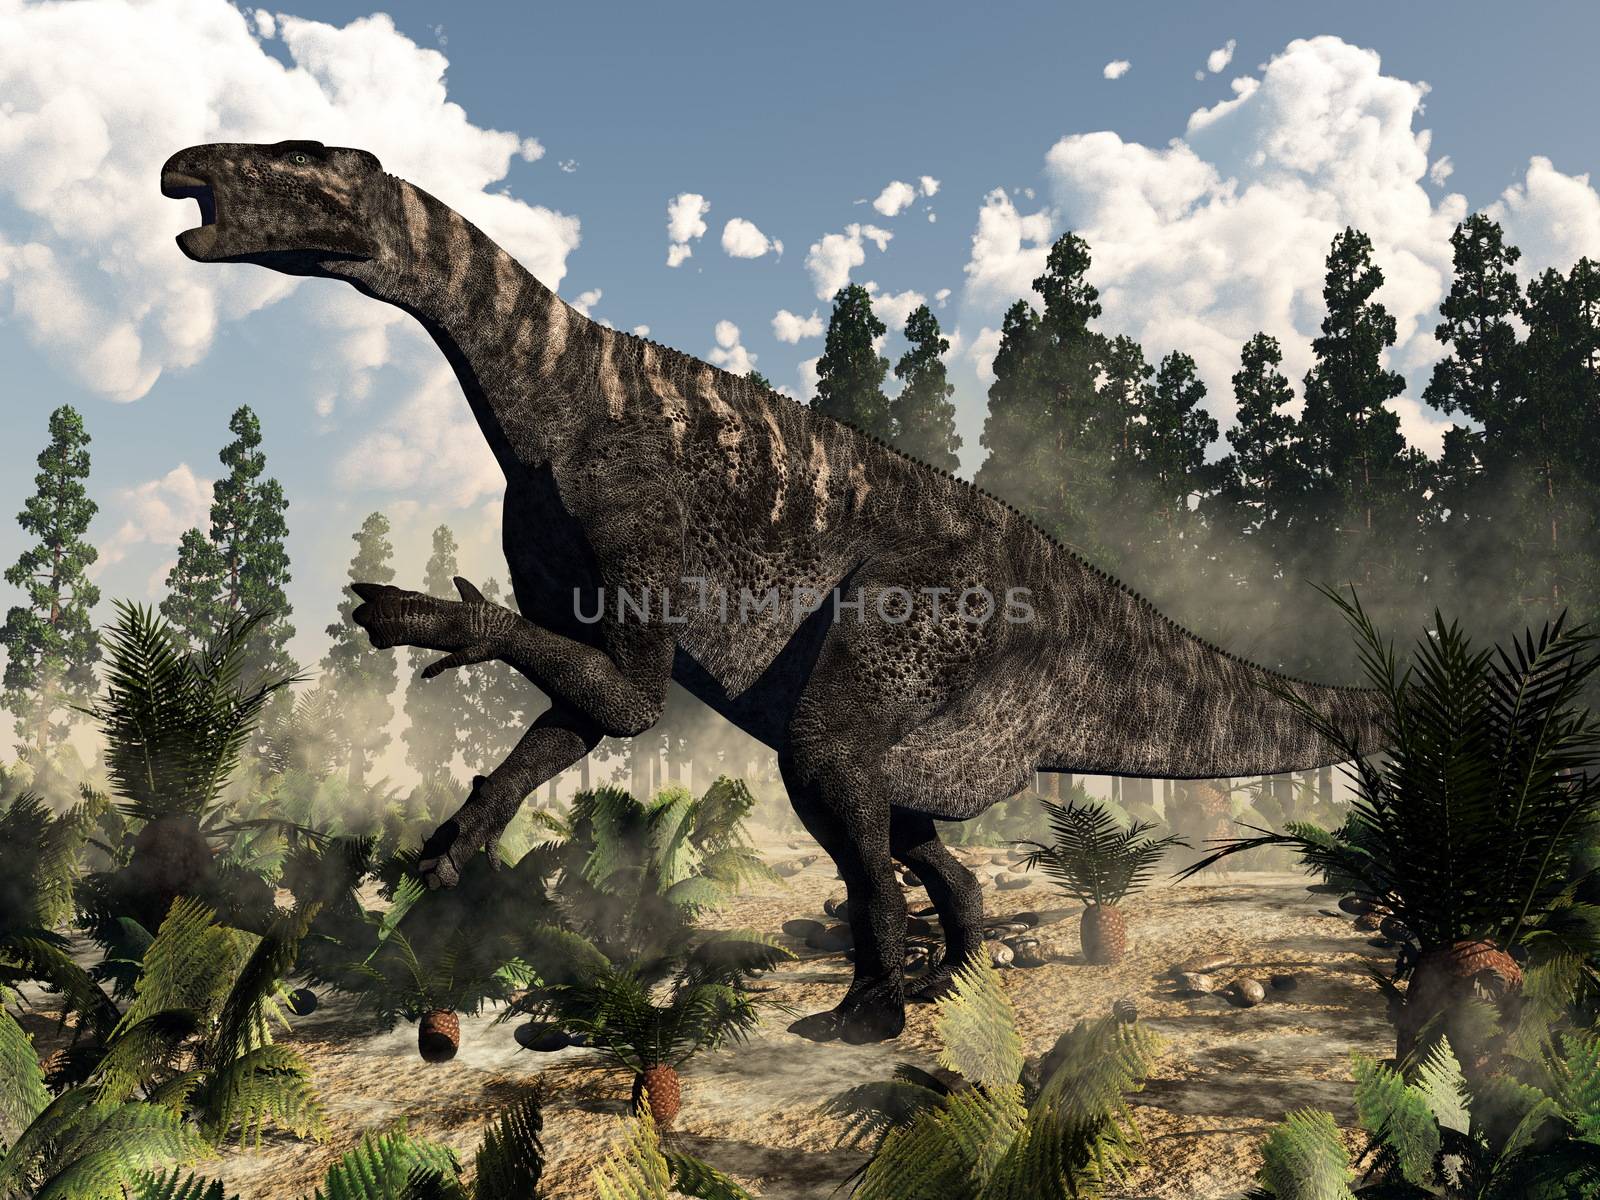 Iguanodon roaring - 3D render by Elenaphotos21